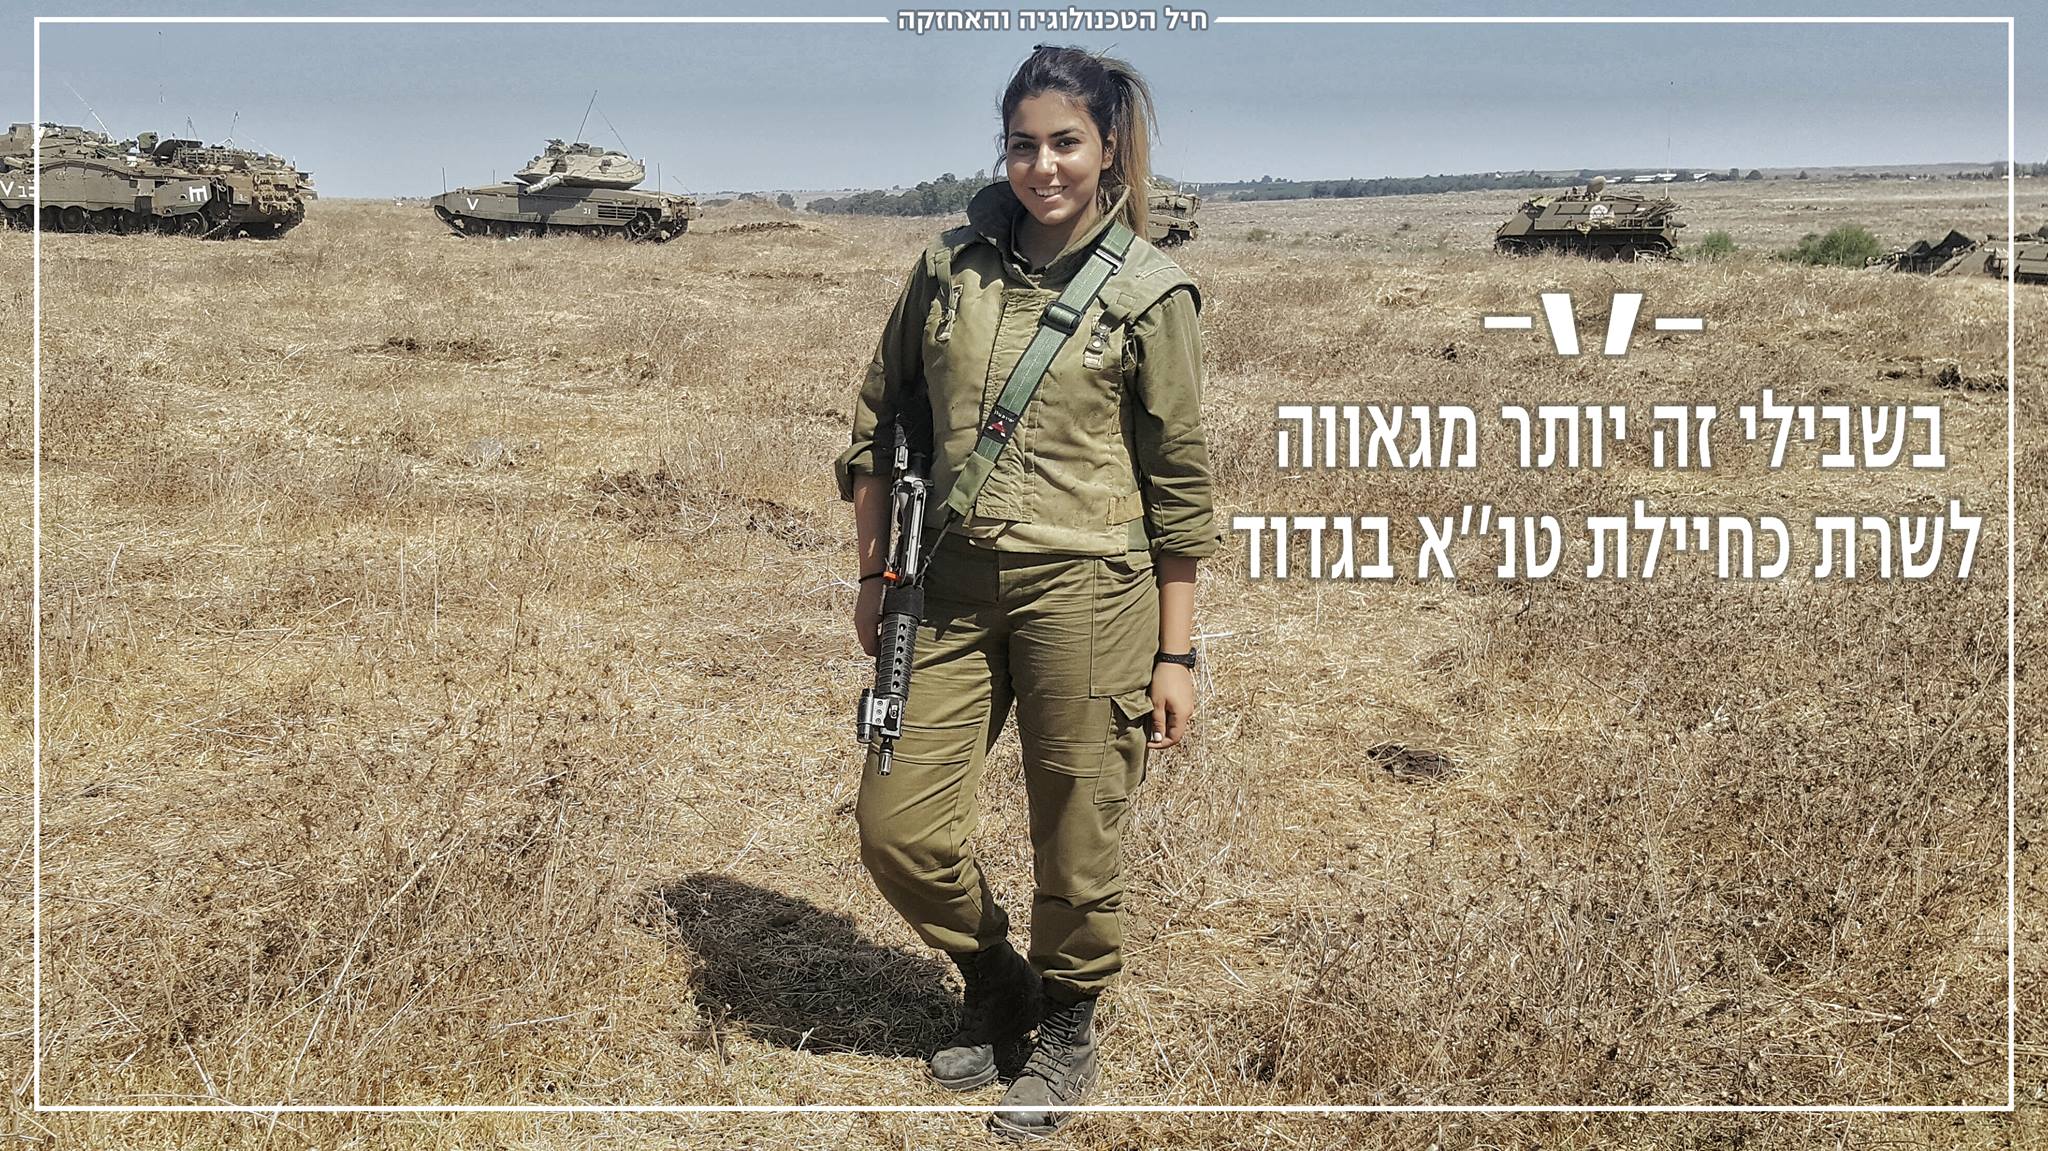 Israel S Women Combat Soldiers On Frontline Of Battle For